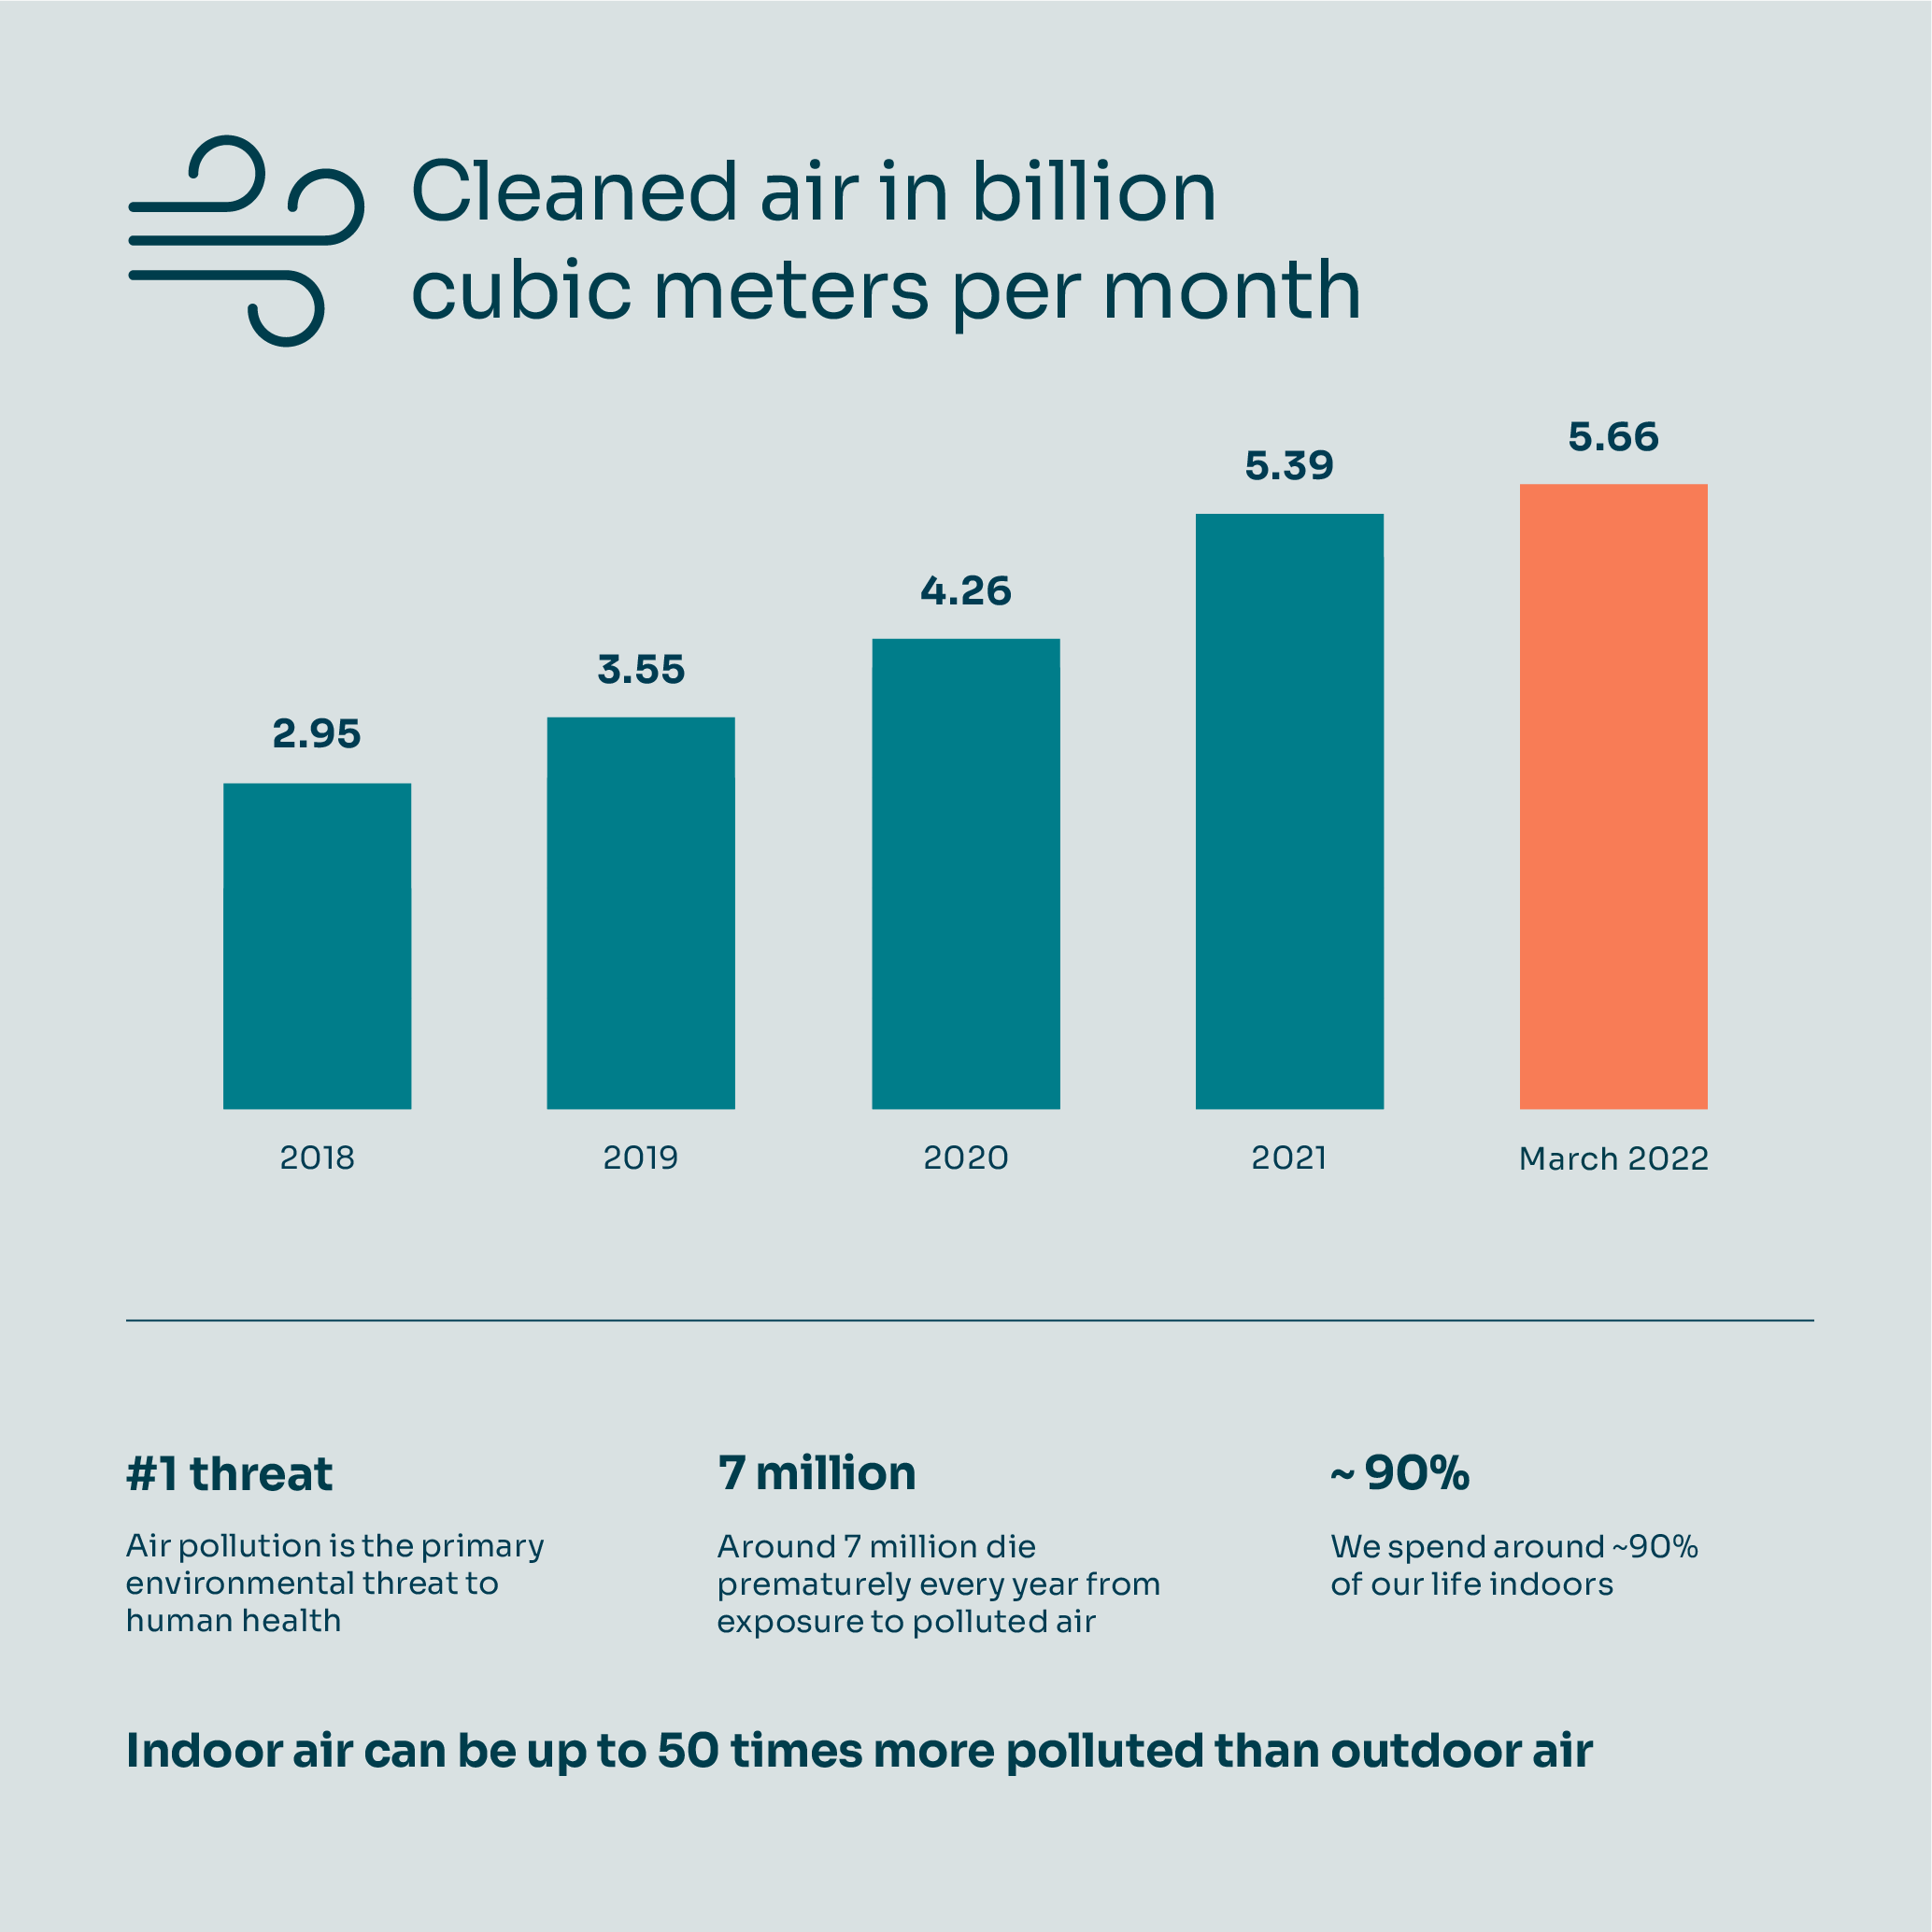 QleanAir delivered 5.66 billion cubic meters of clean air in Q1